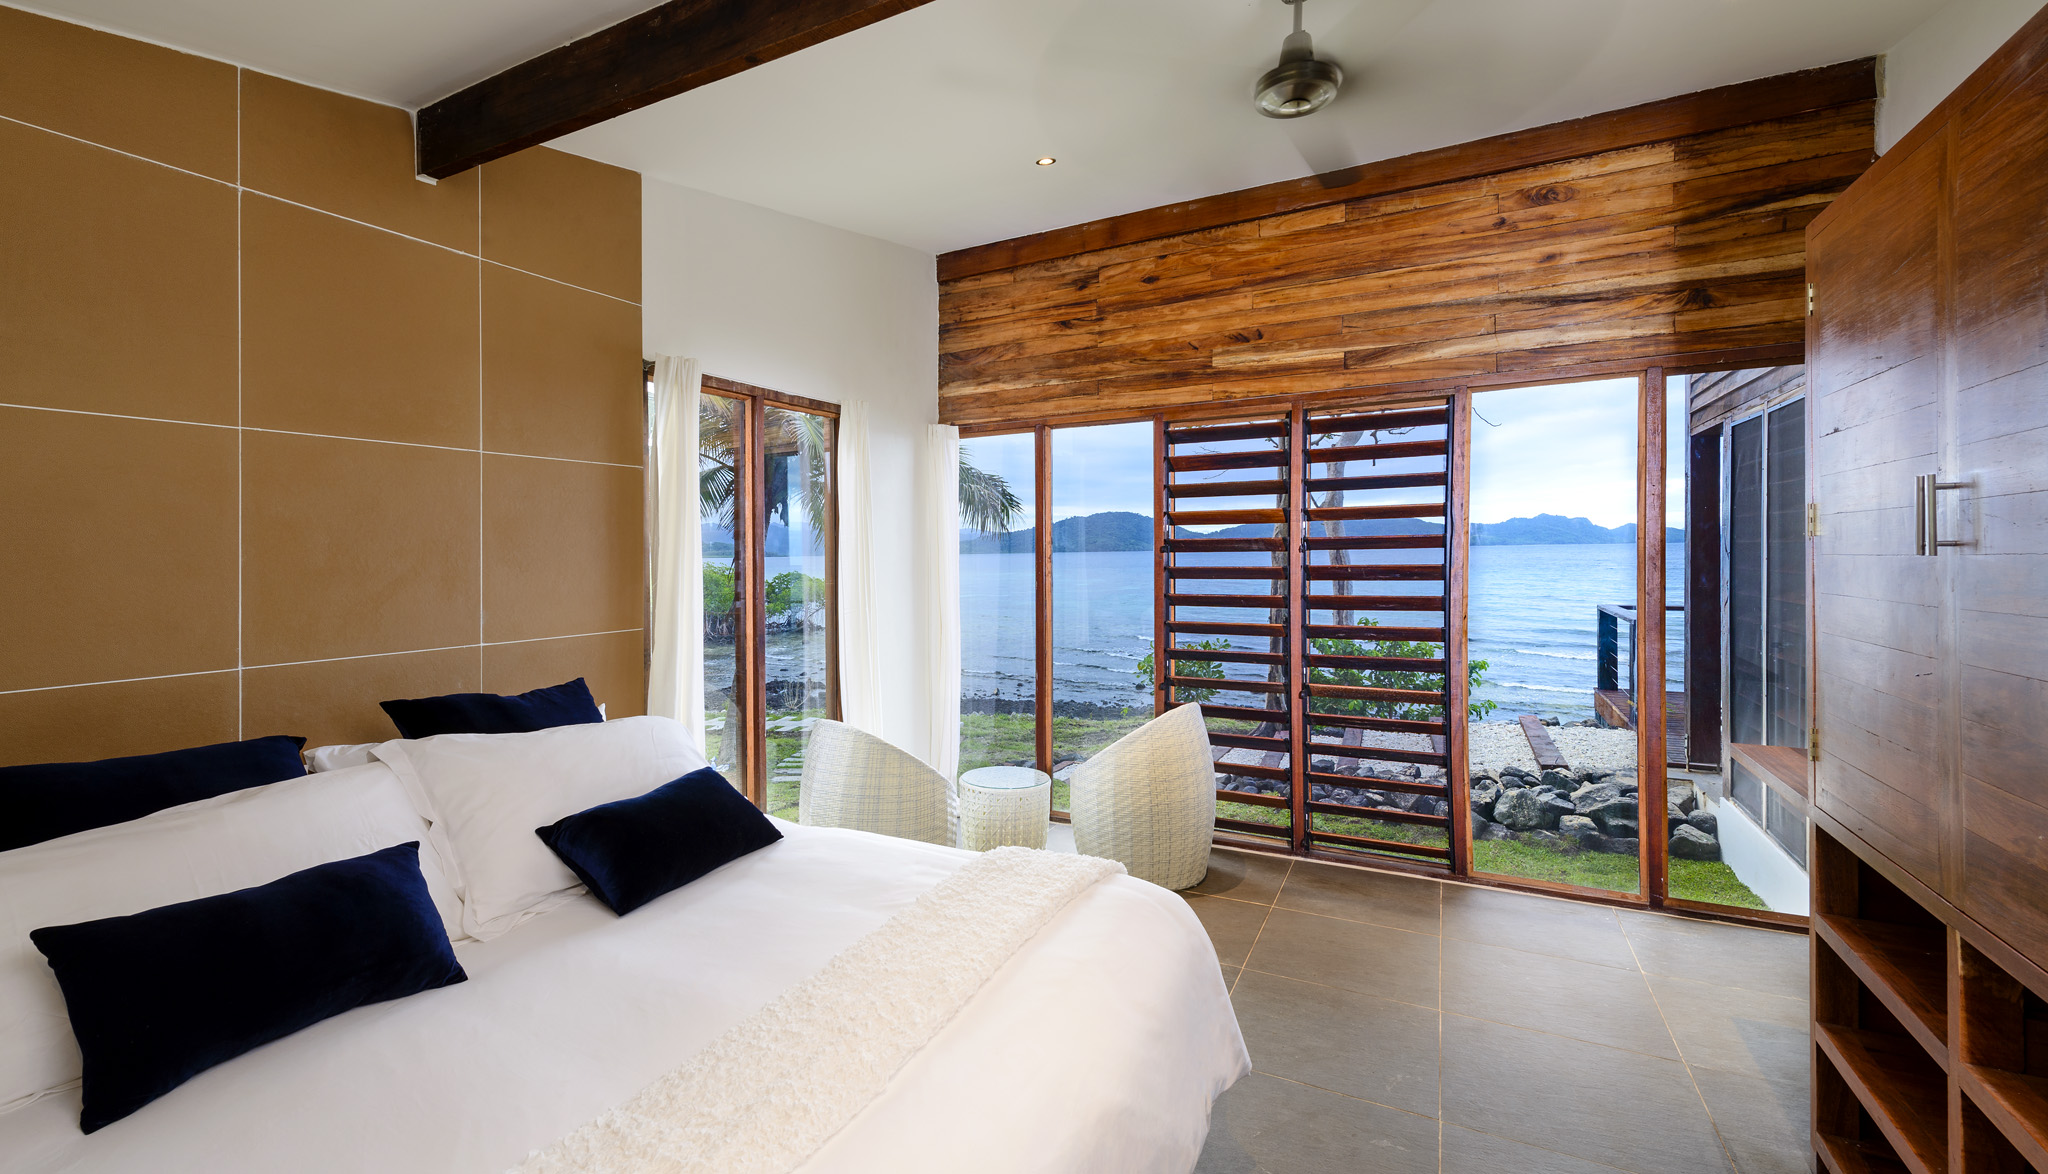 Two-bedroom Villa with floor to ceiling windows, The Remote Resort Fiji Islands